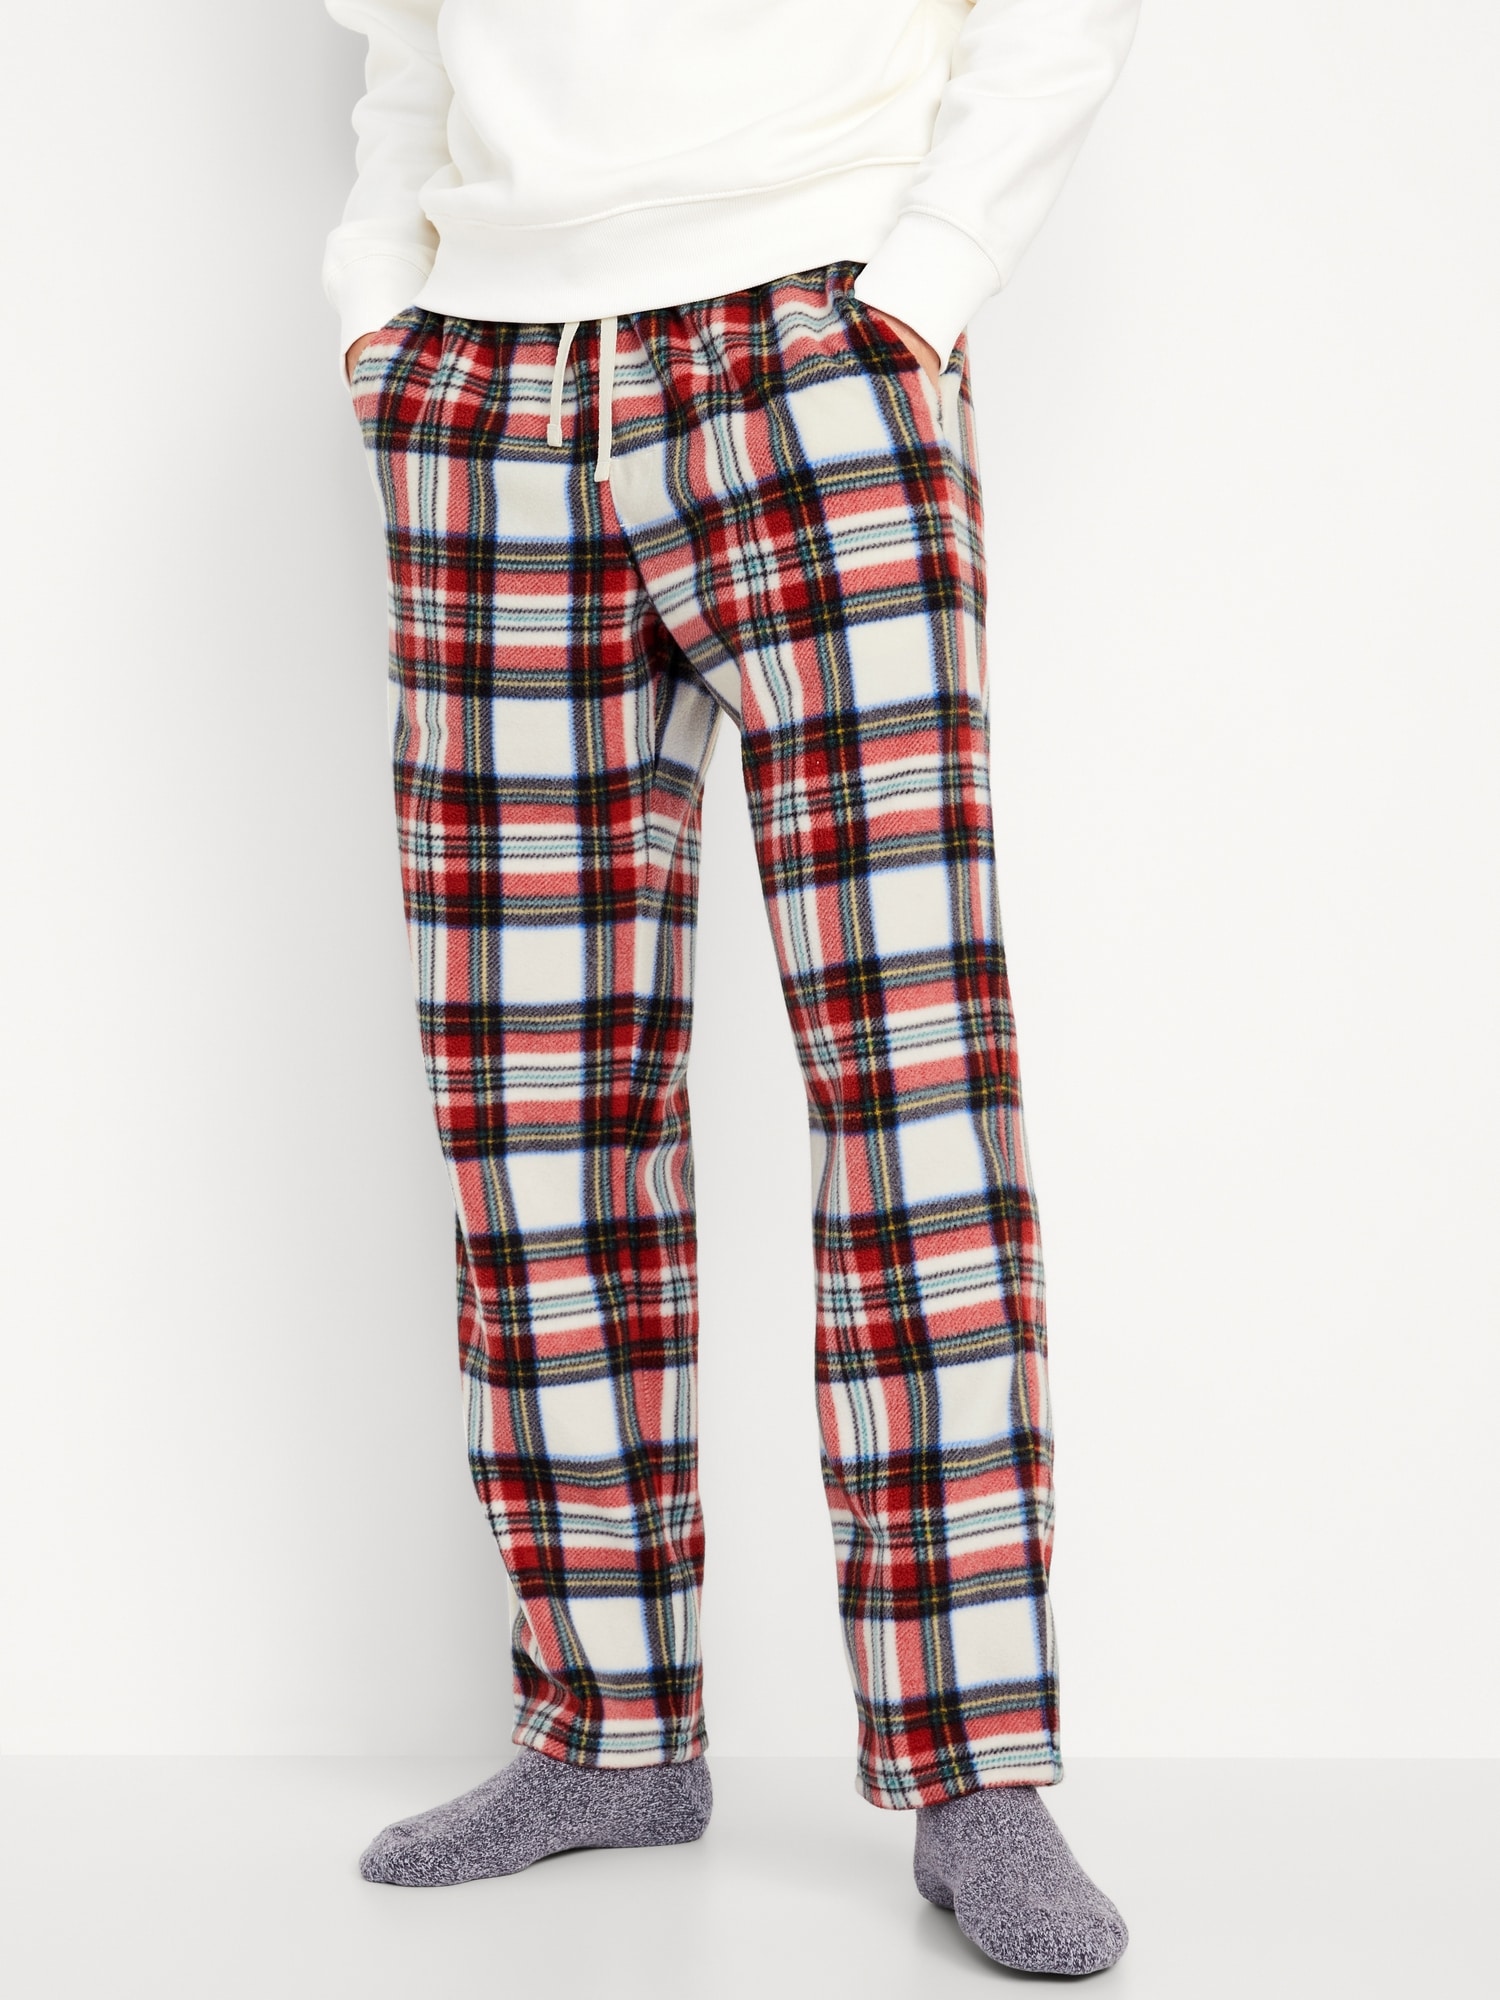 3-Pack: Womens Ultra-Plush Micro Fleece Fuzzy Pajama Pants